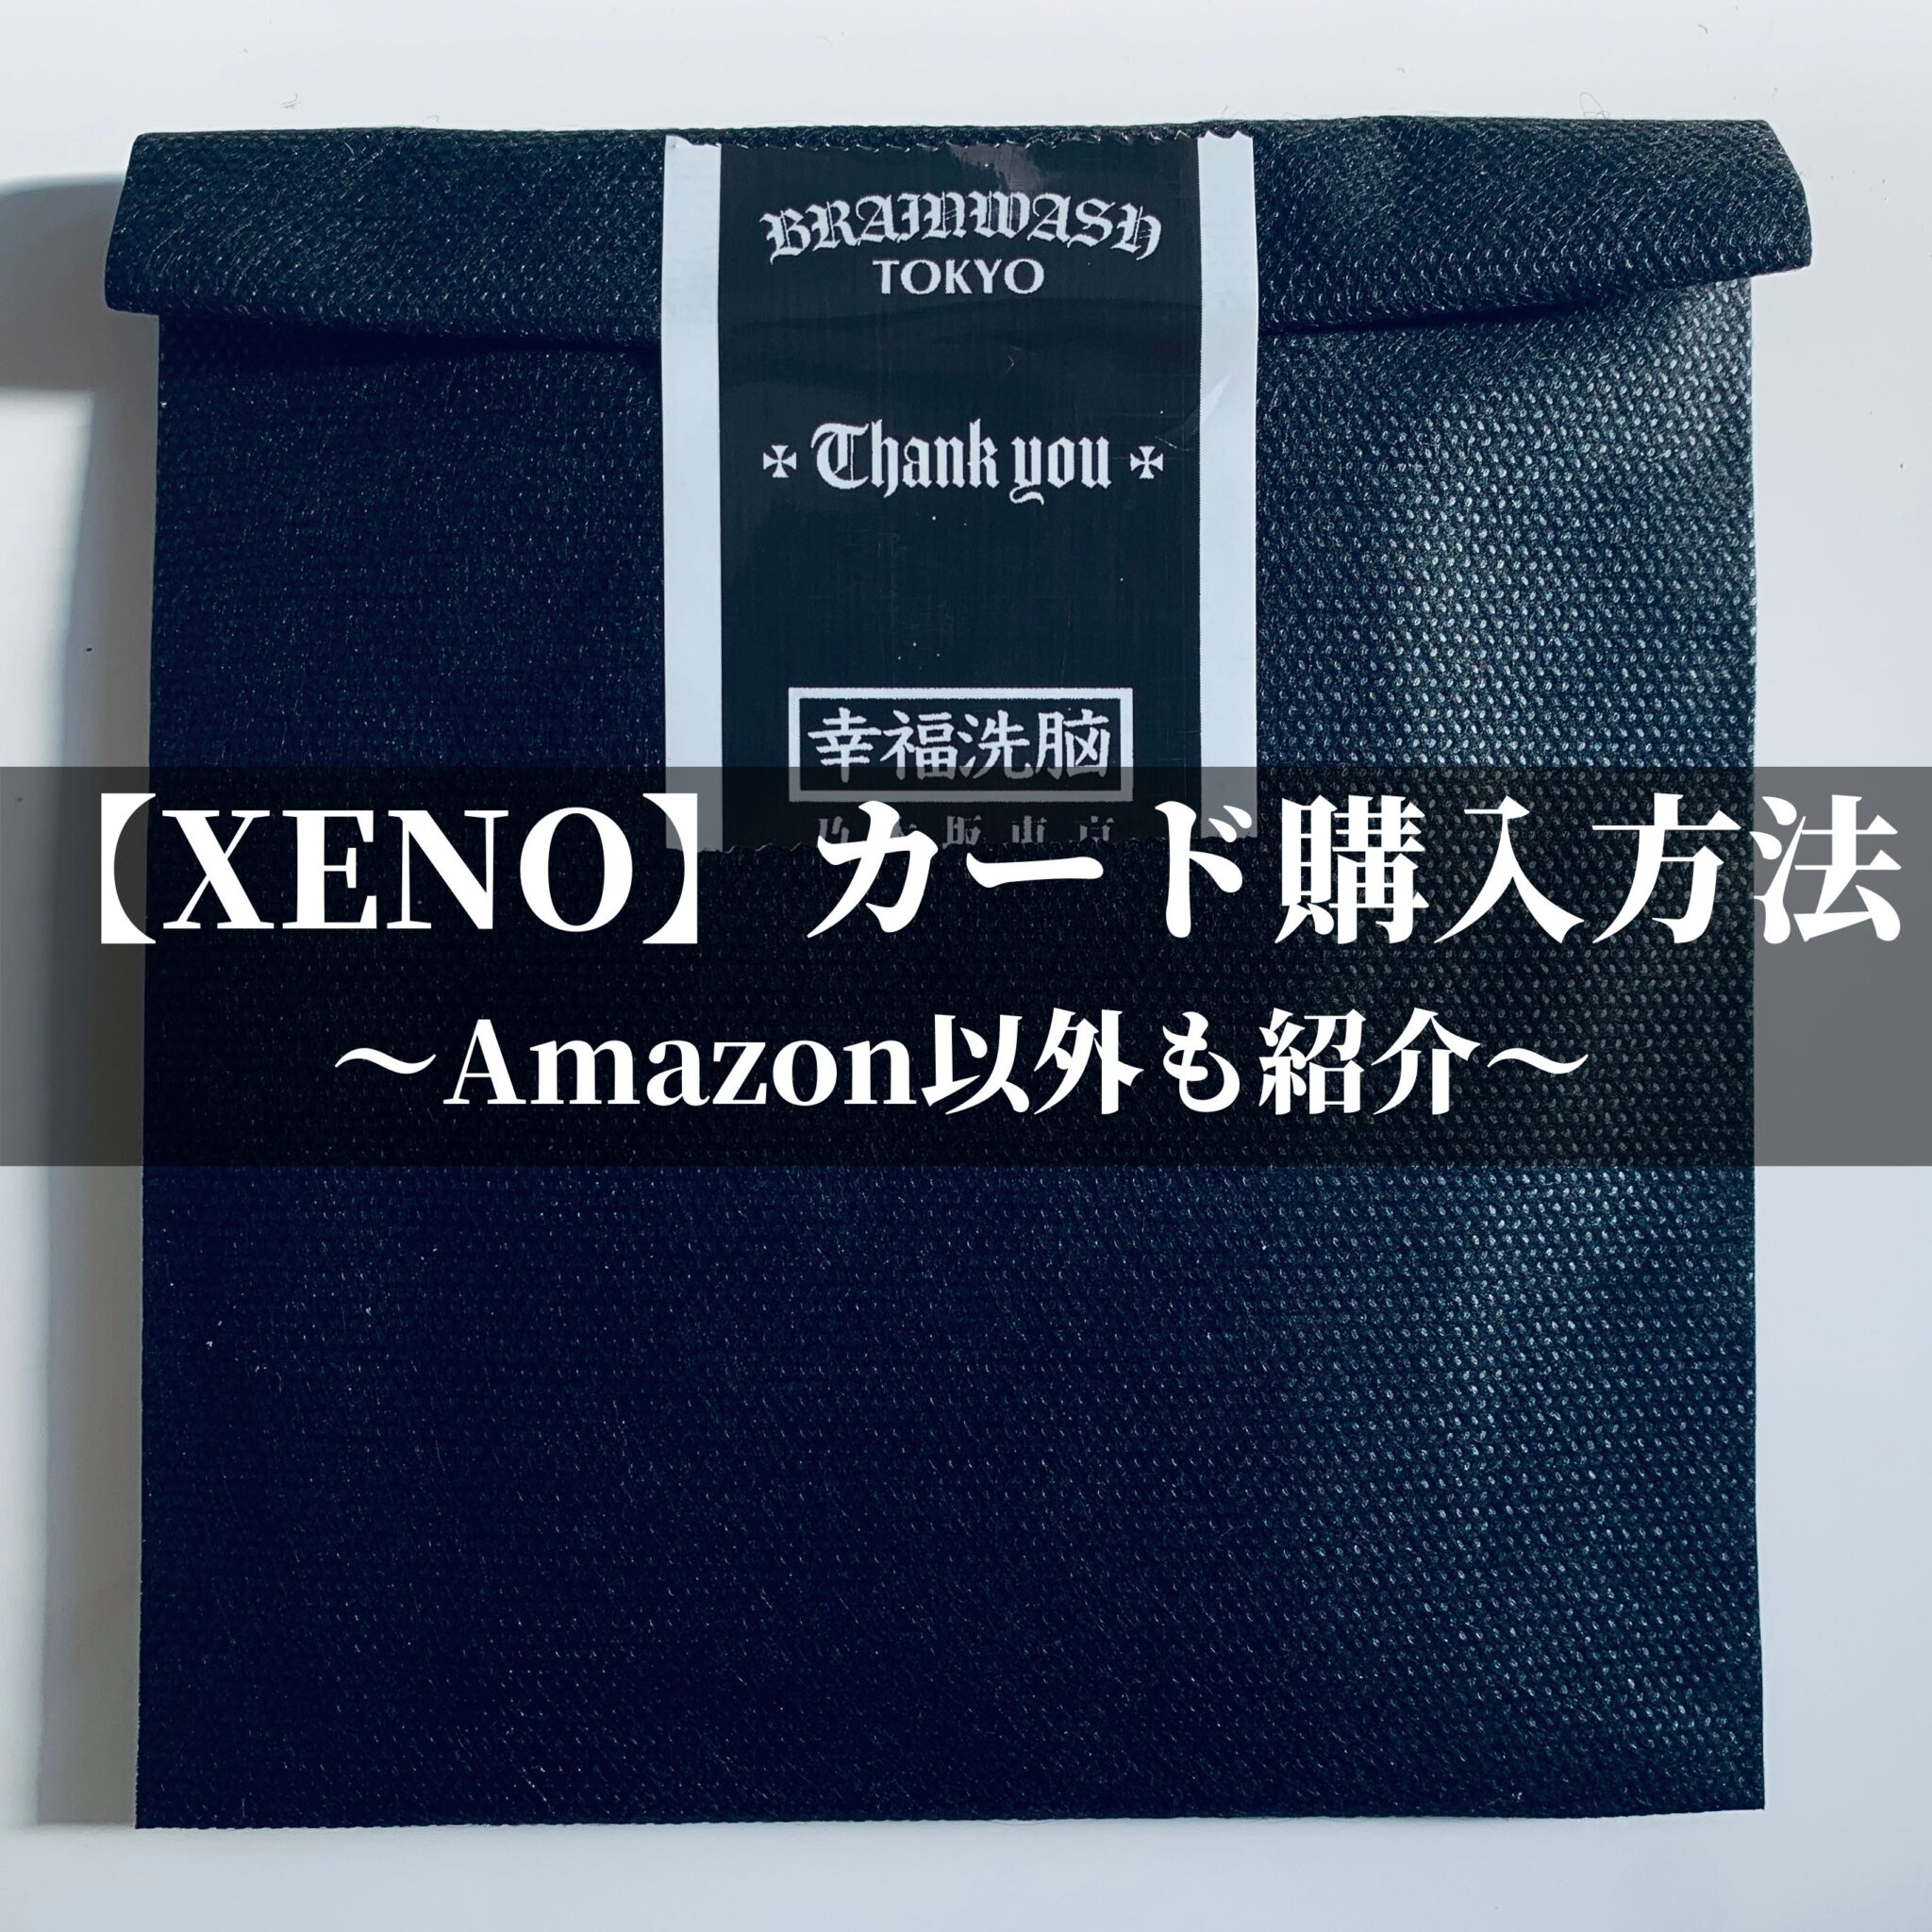 XENO】カードゲーム購入方法『Amazon以外も紹介』【3つの購入方法】